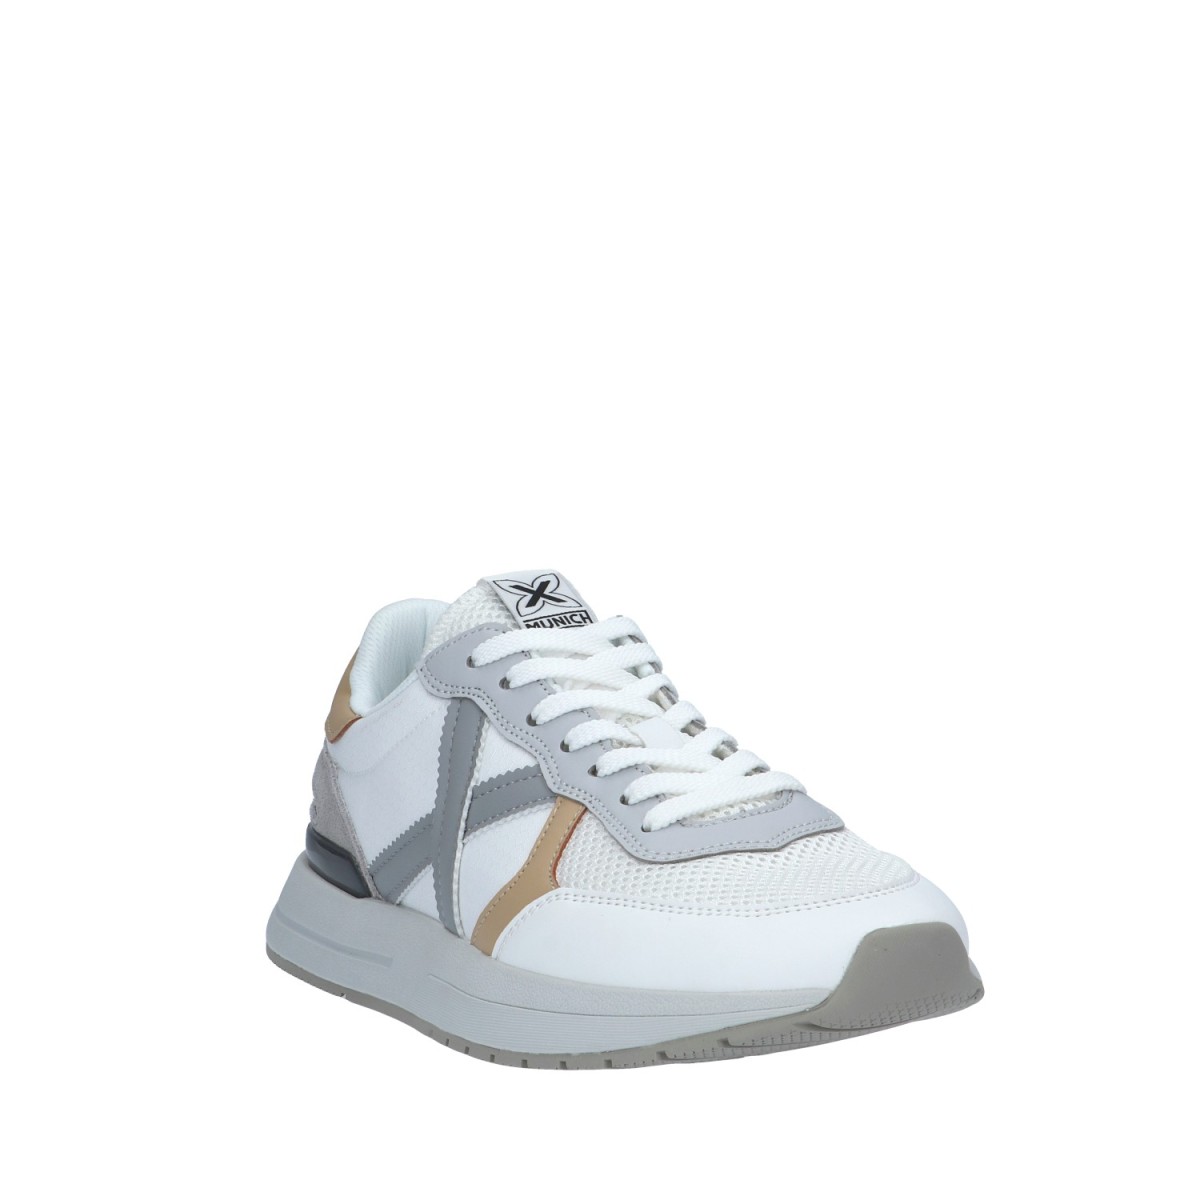 Munich Sneaker Bianco/grigio Gomma 8904057